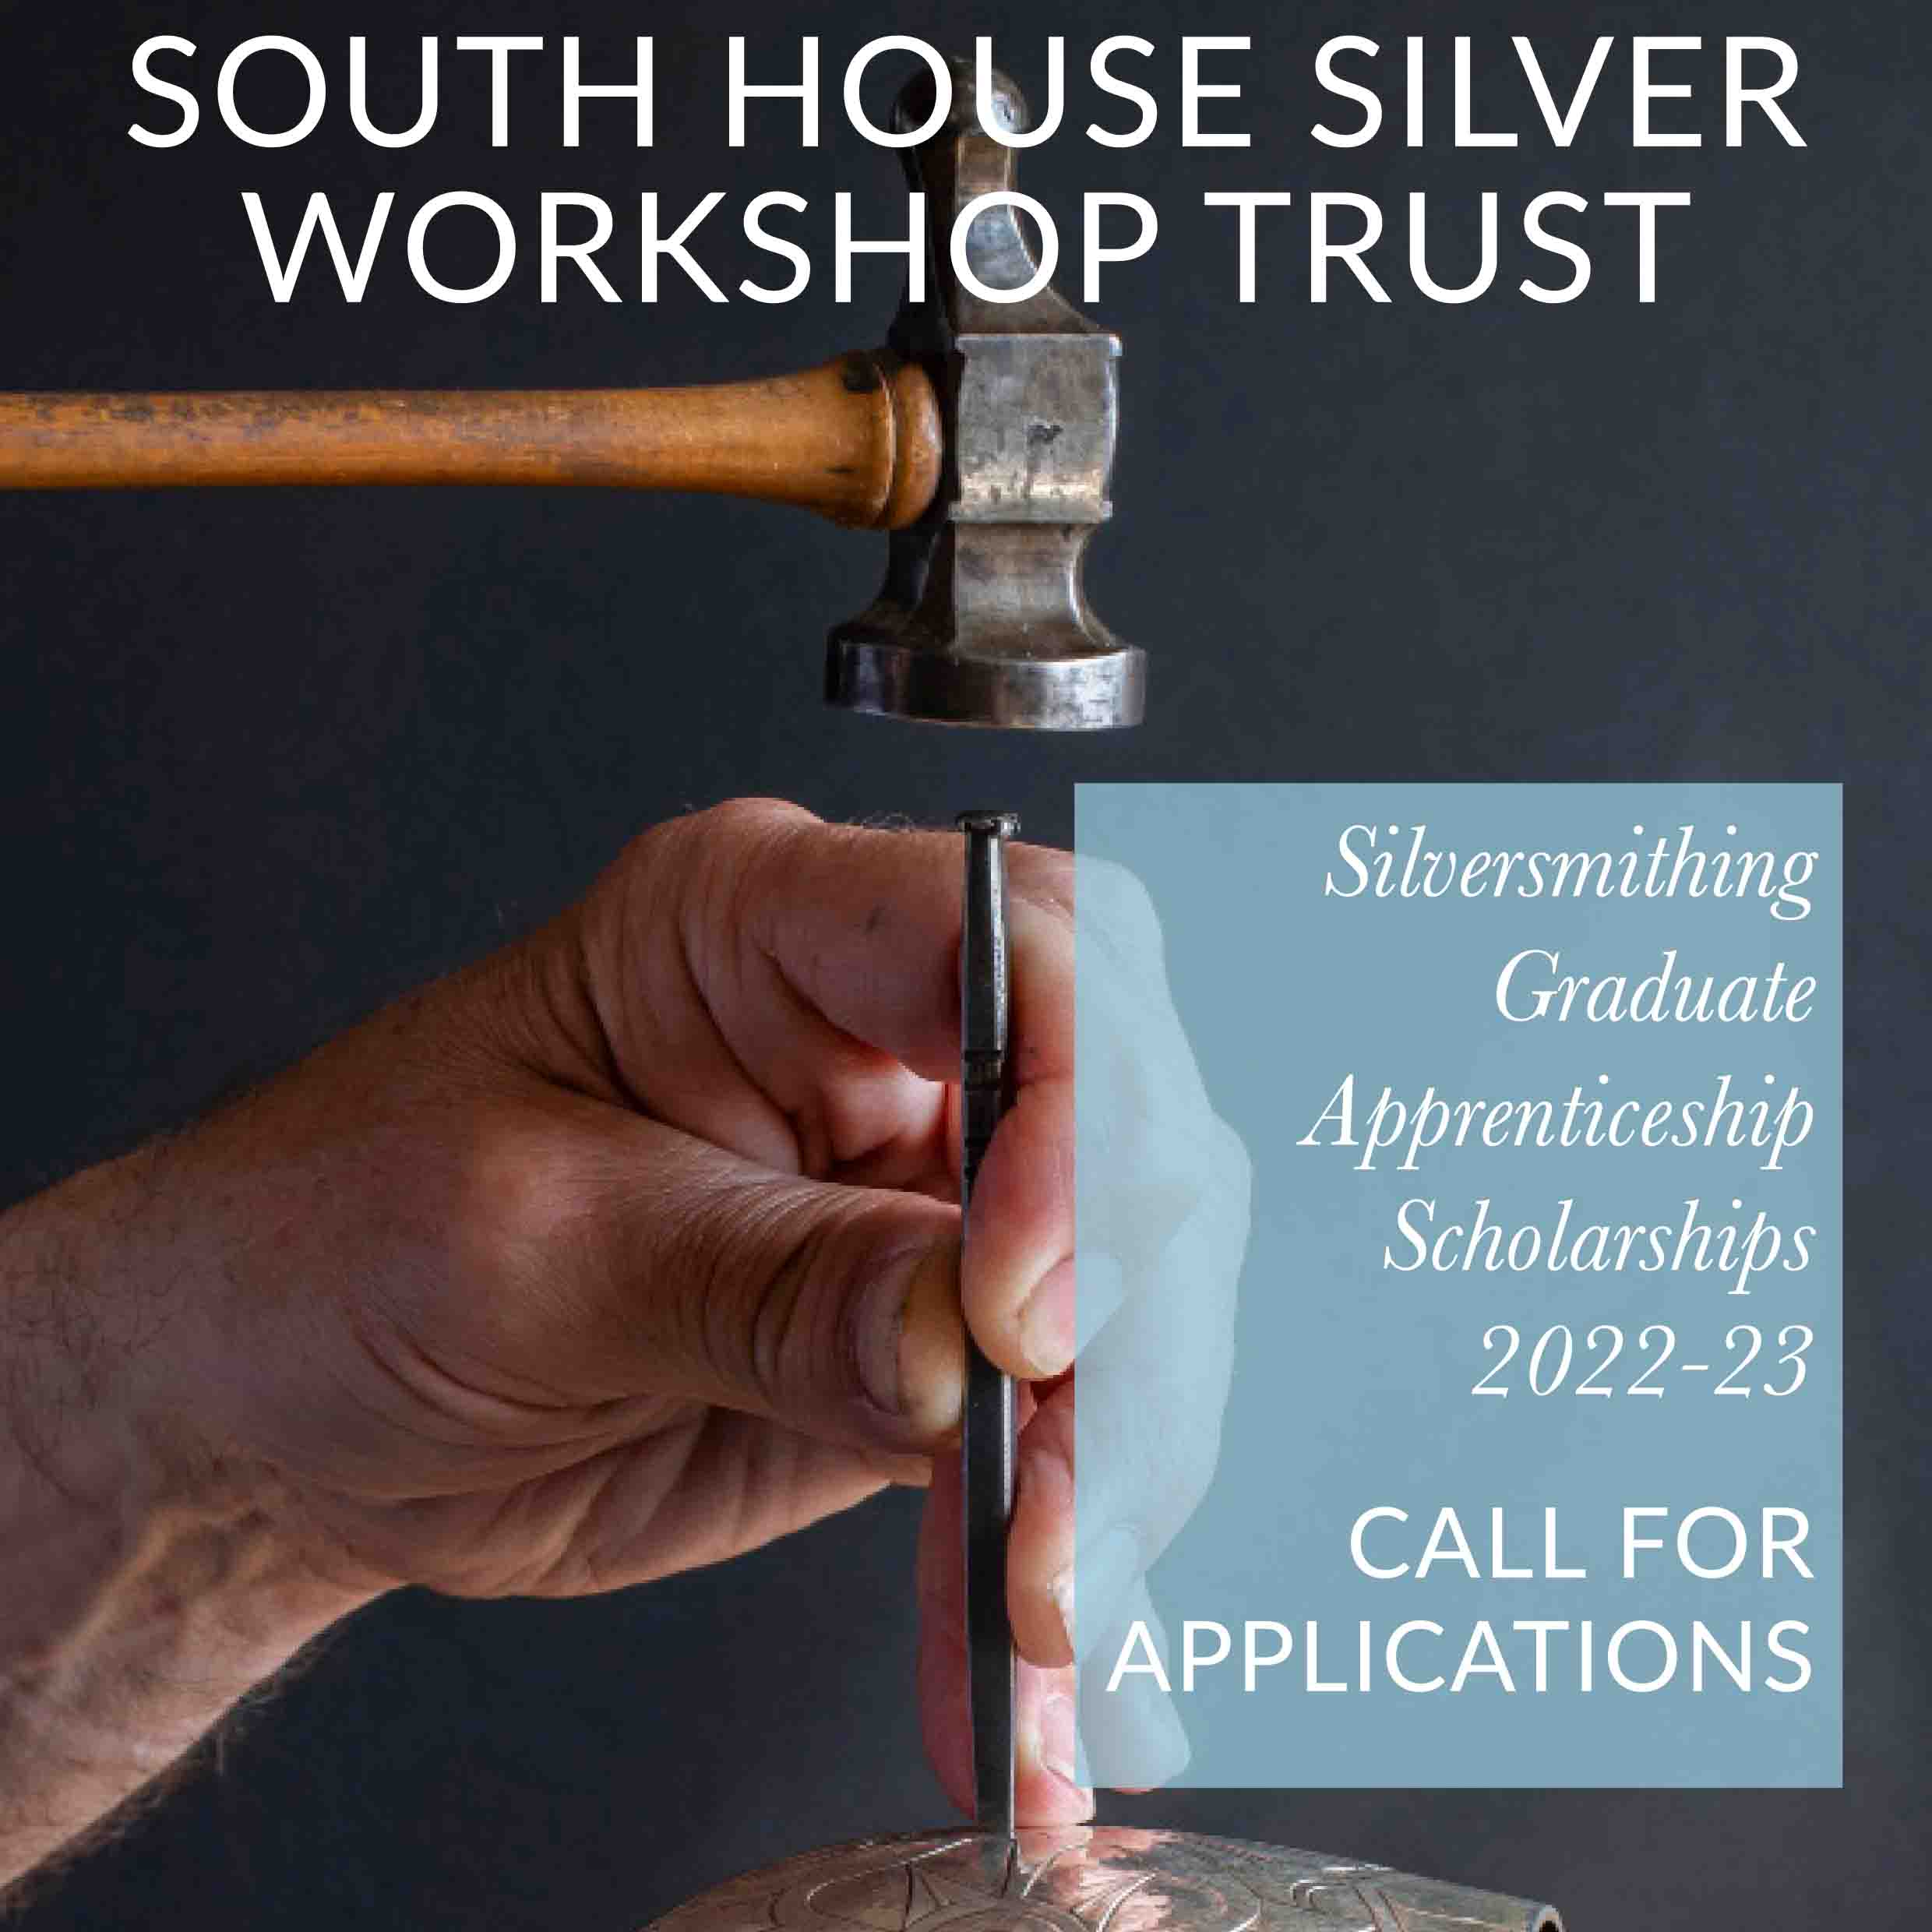 Silversmithing Graduate Apprenticeship Scholarships 2022-23